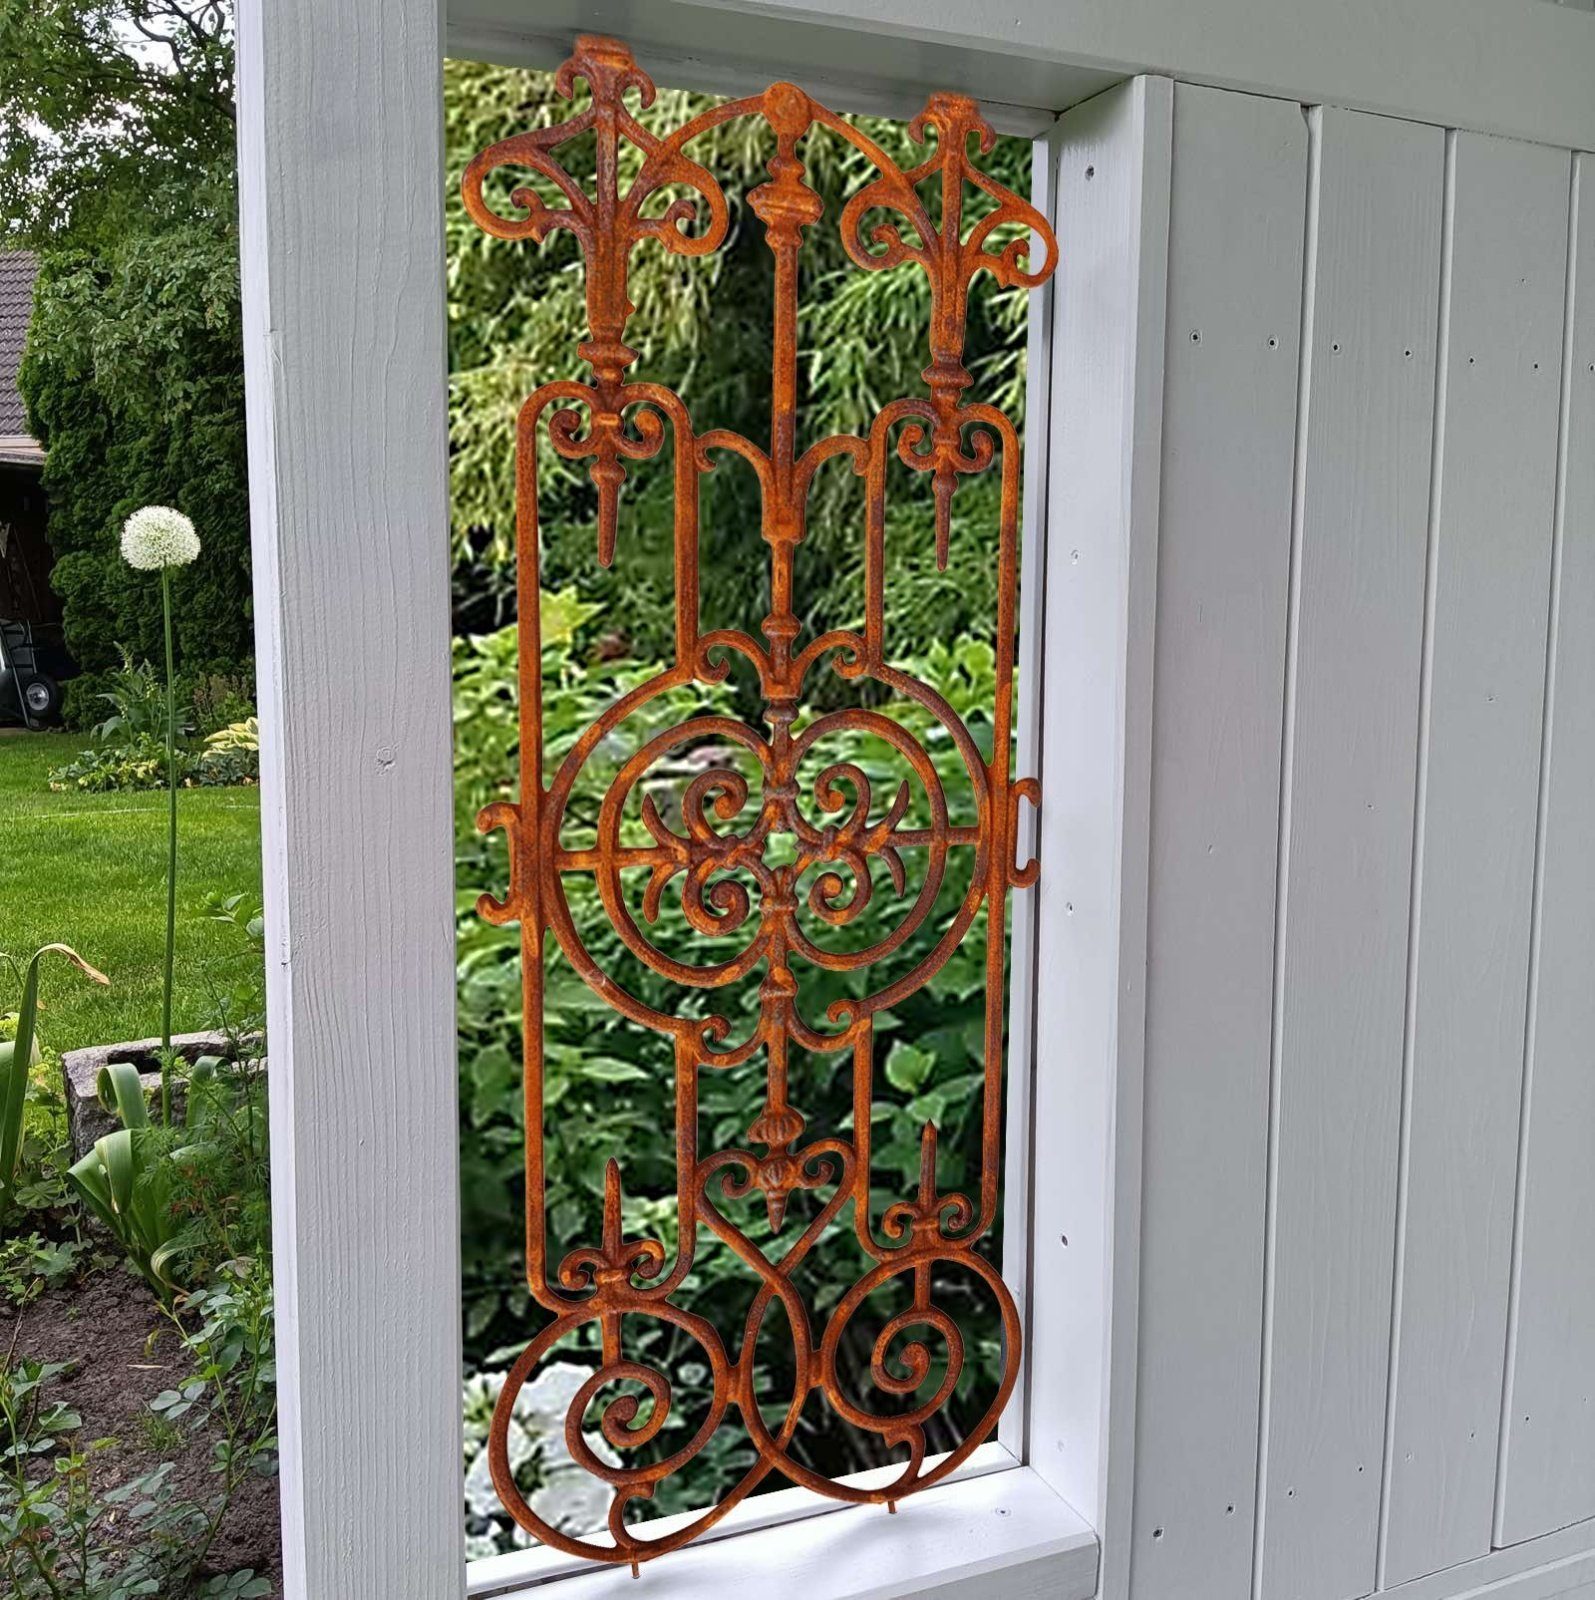 Aubaho Fenster Gitter Garten Zaun Treppen Antik-Stil Eisen Balkon Geländer Rankhilfe